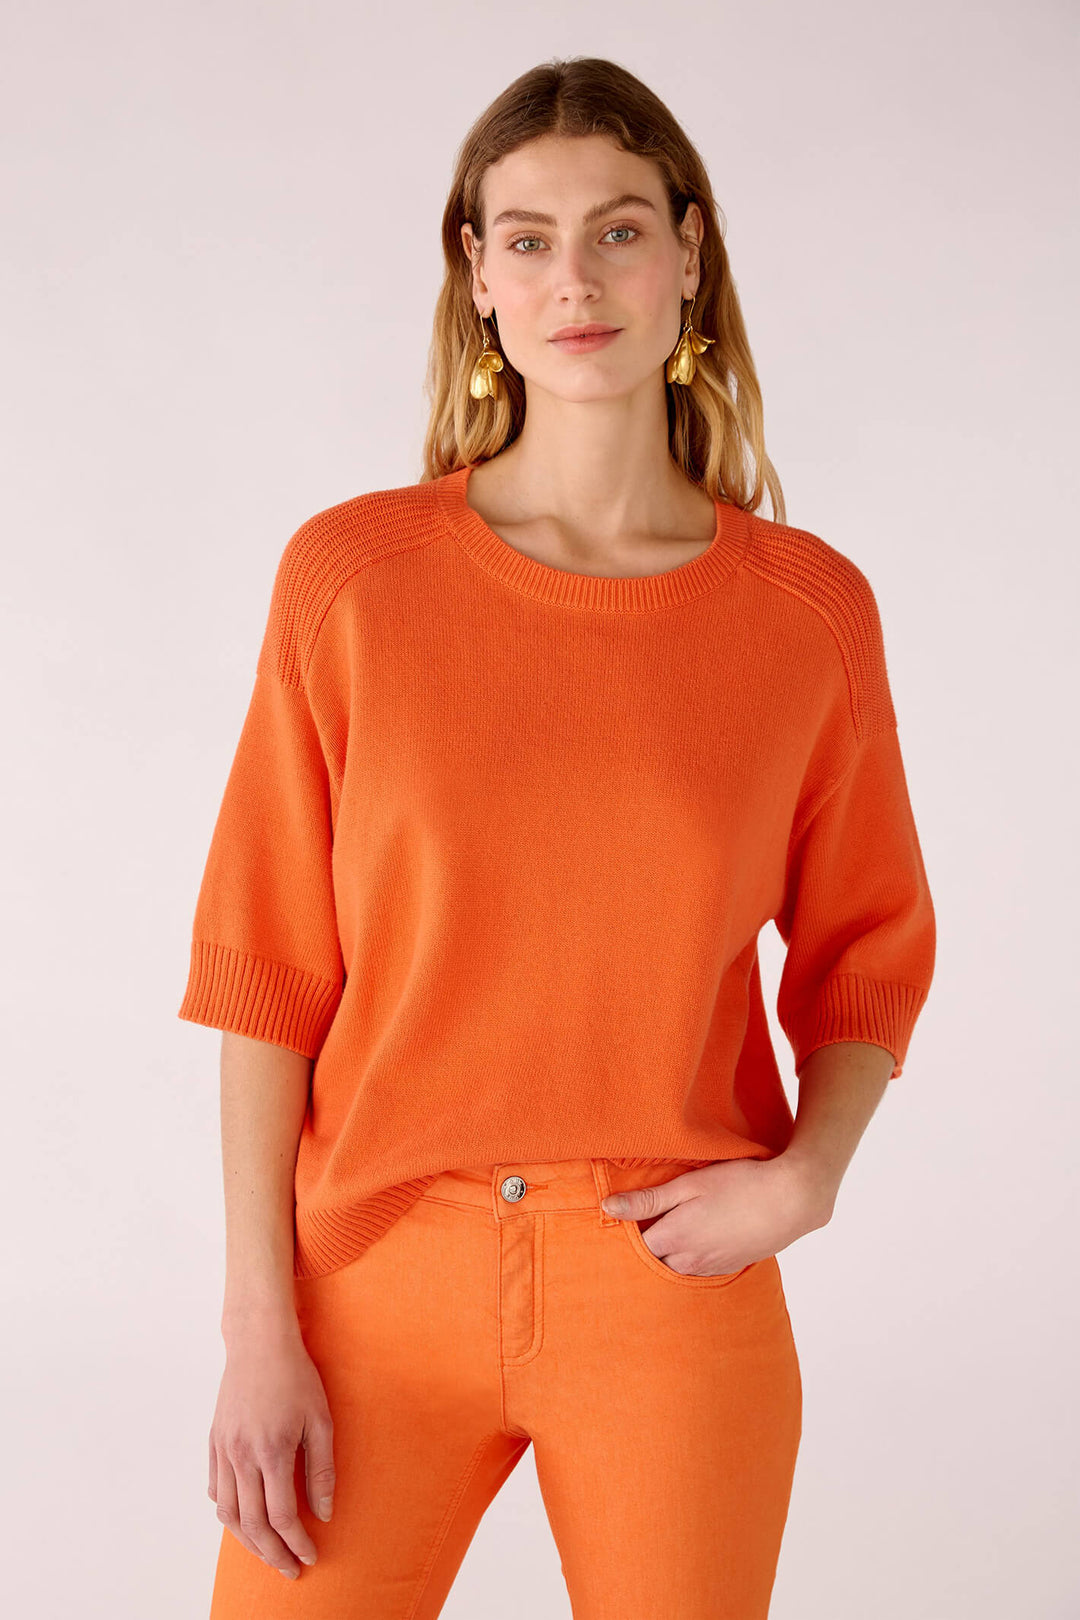 Oui 78116 Orange Short Sleeved Jumper - Olivia Grace Fashion